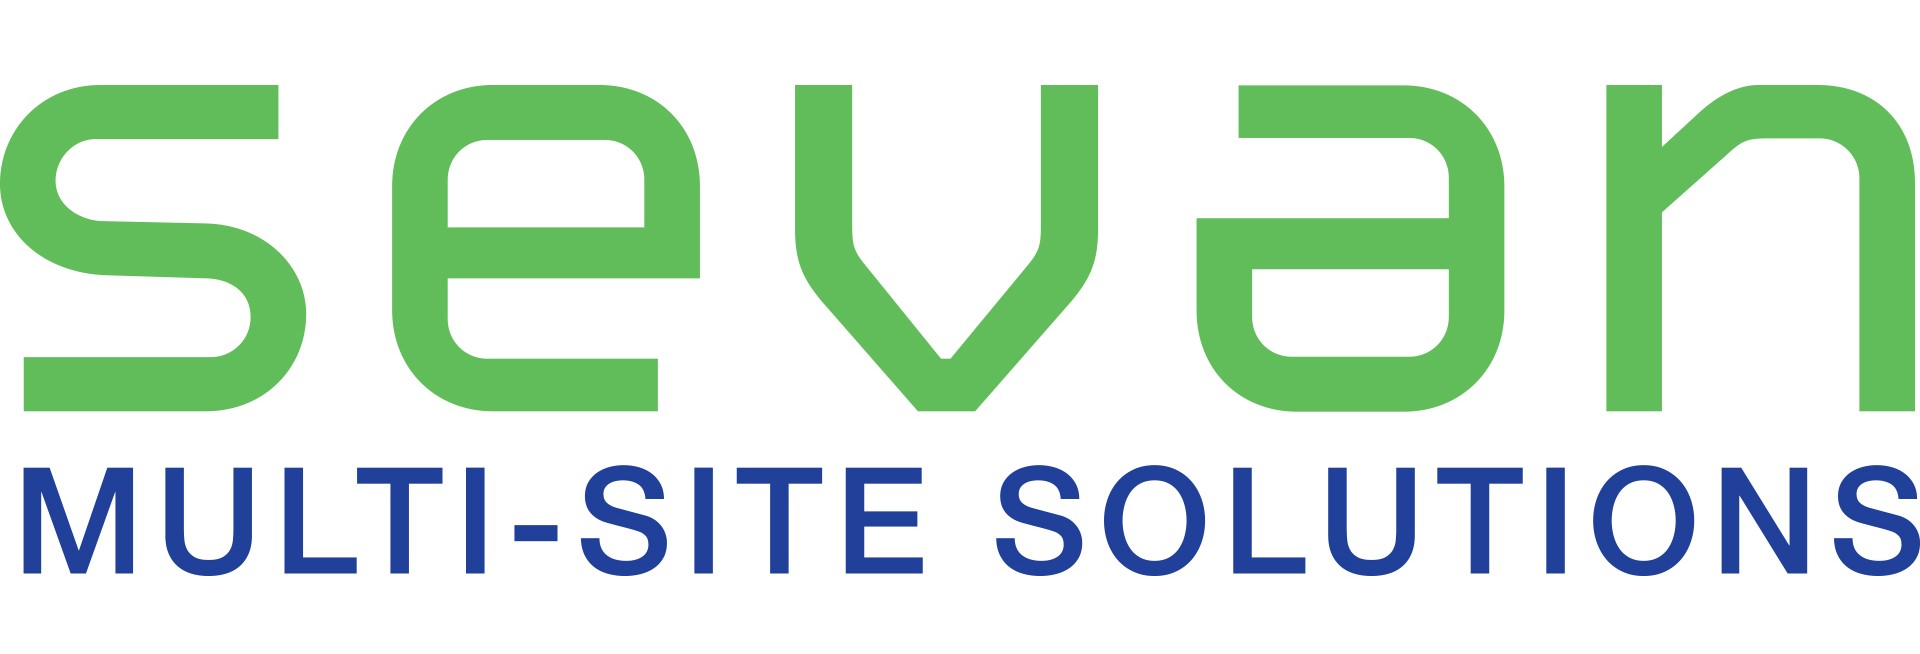 SevanMulti-SiteSolutions_1920x1440_Logo_RGB